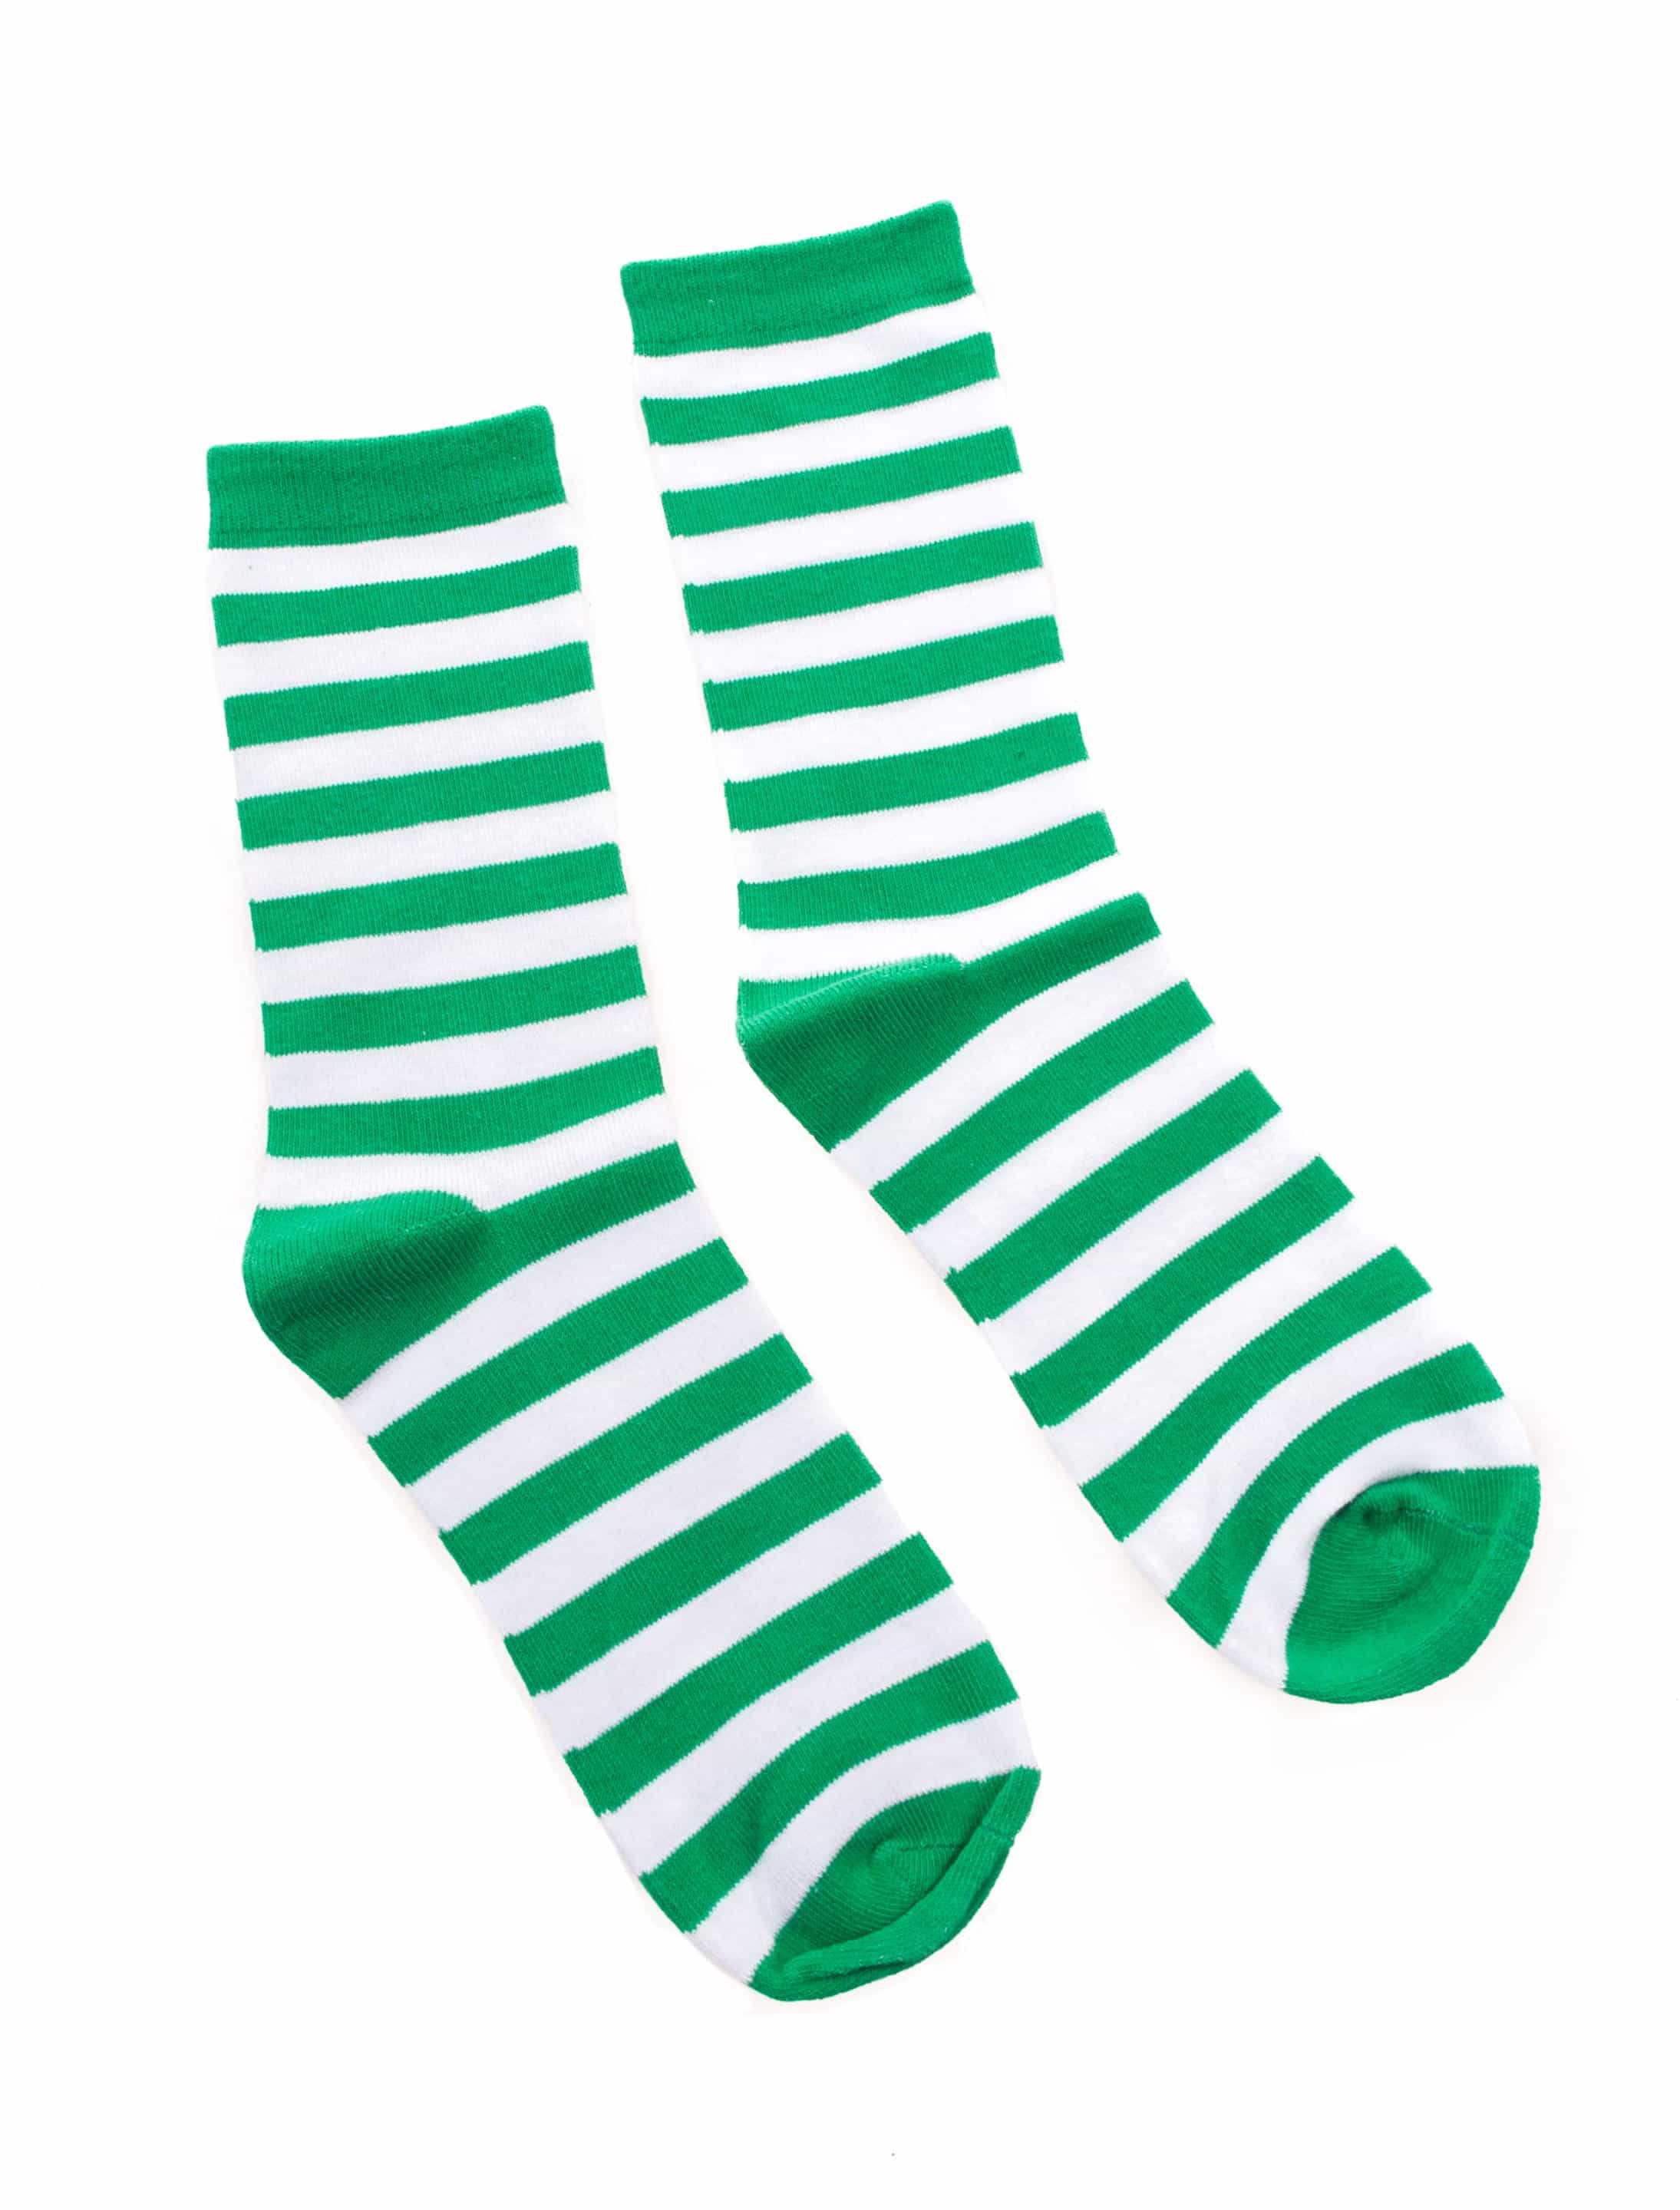 Socken gestreift grün/weiß 41-46